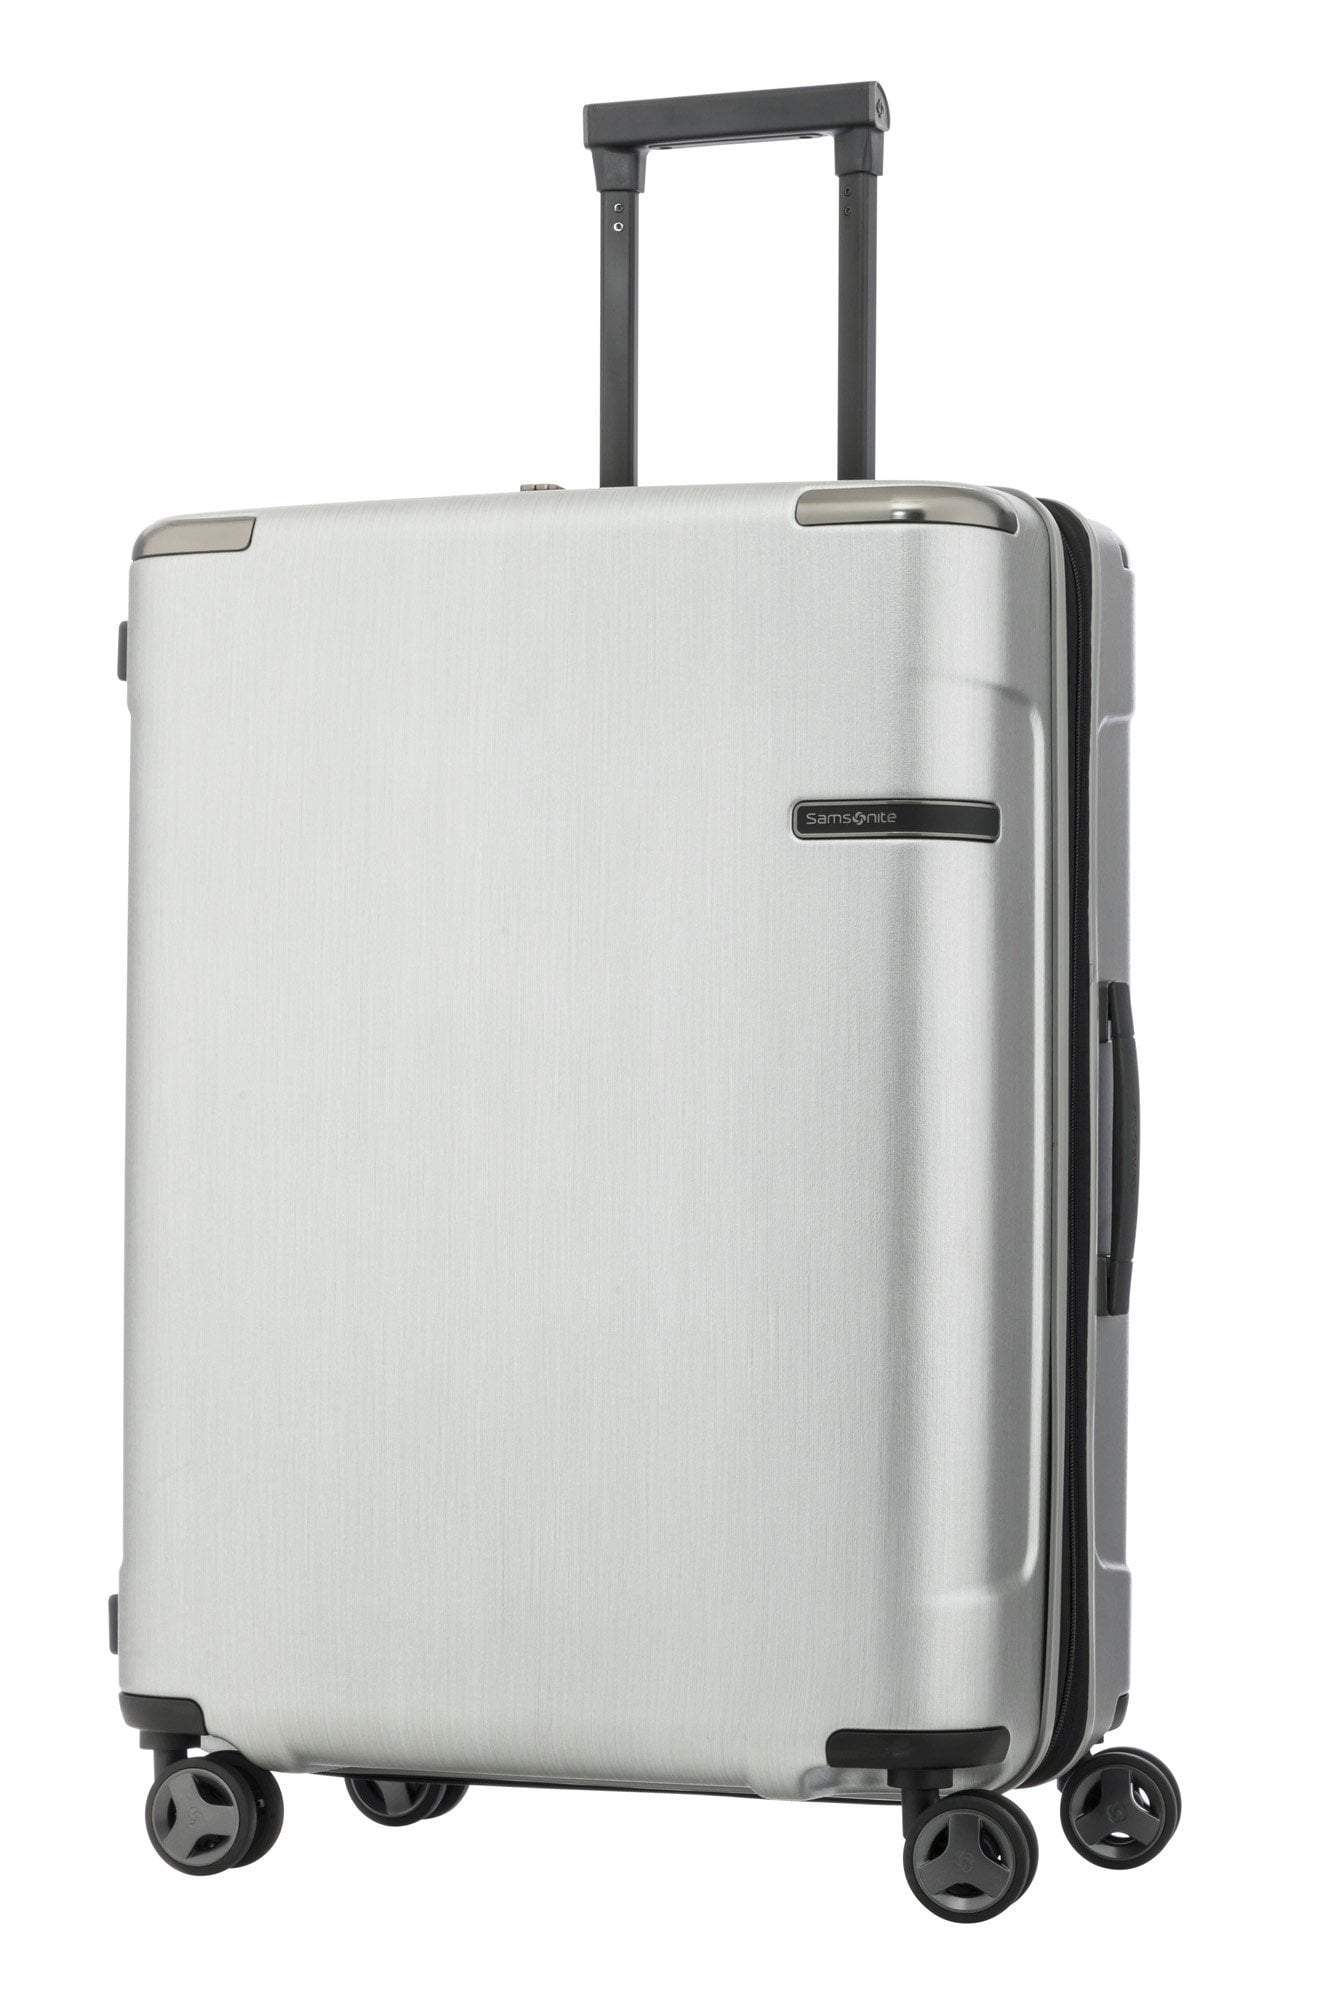 Samsonite Evoa Spinner Medium Expandable Luggage - Brushed Silver